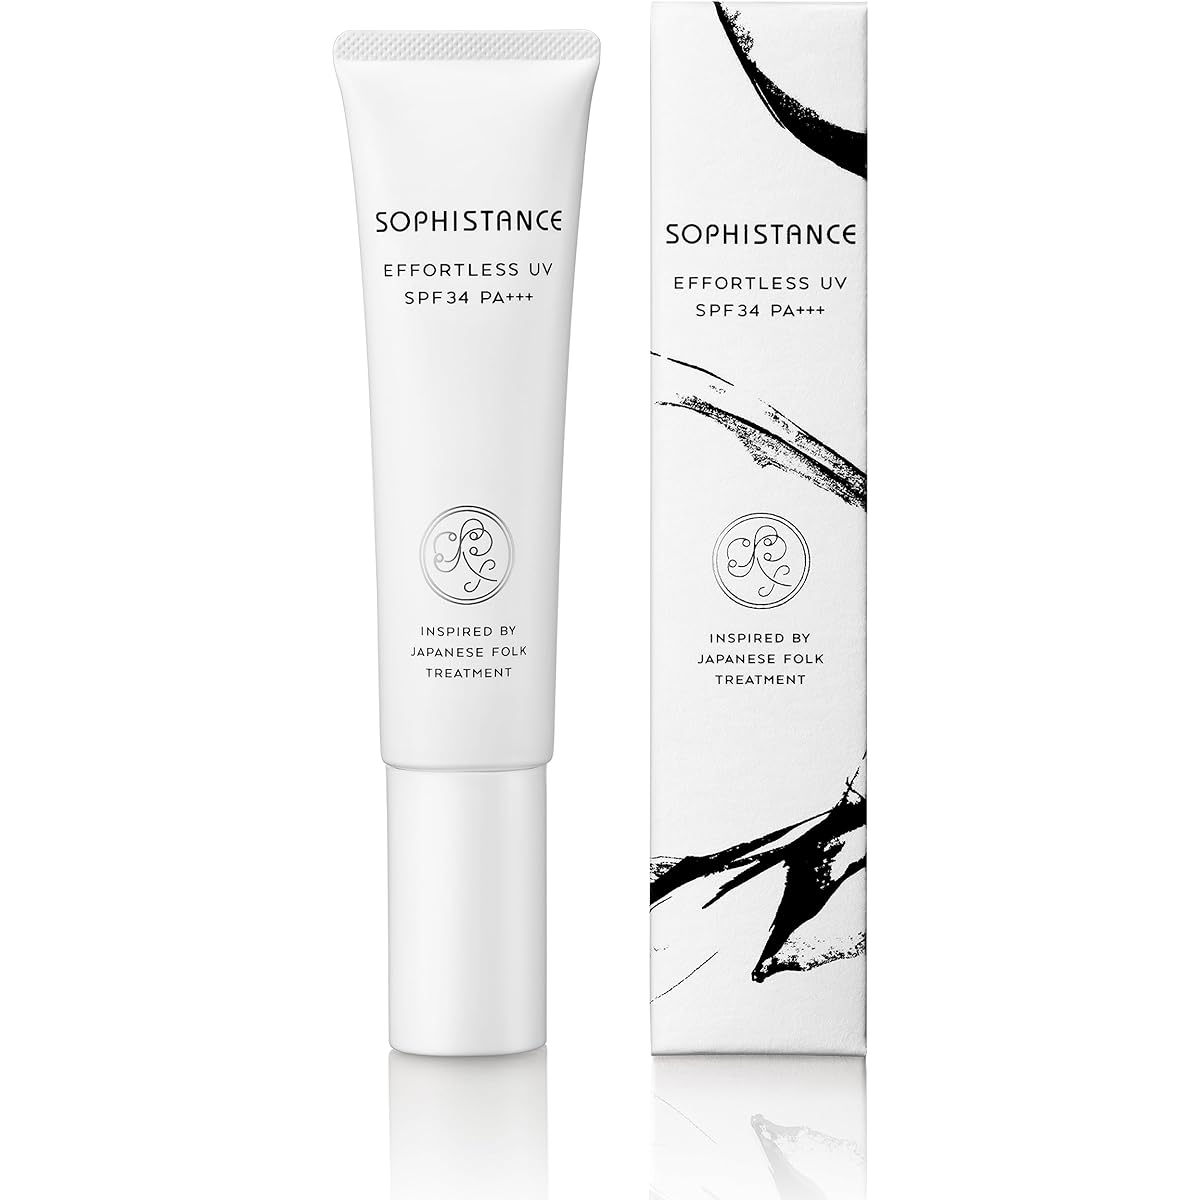 Sophistance Effortless UV Serum Veil Sunscreen Serum Base 40g Additive-free Plant-derived Sensitive skin Prevents rough skin Made in Japan